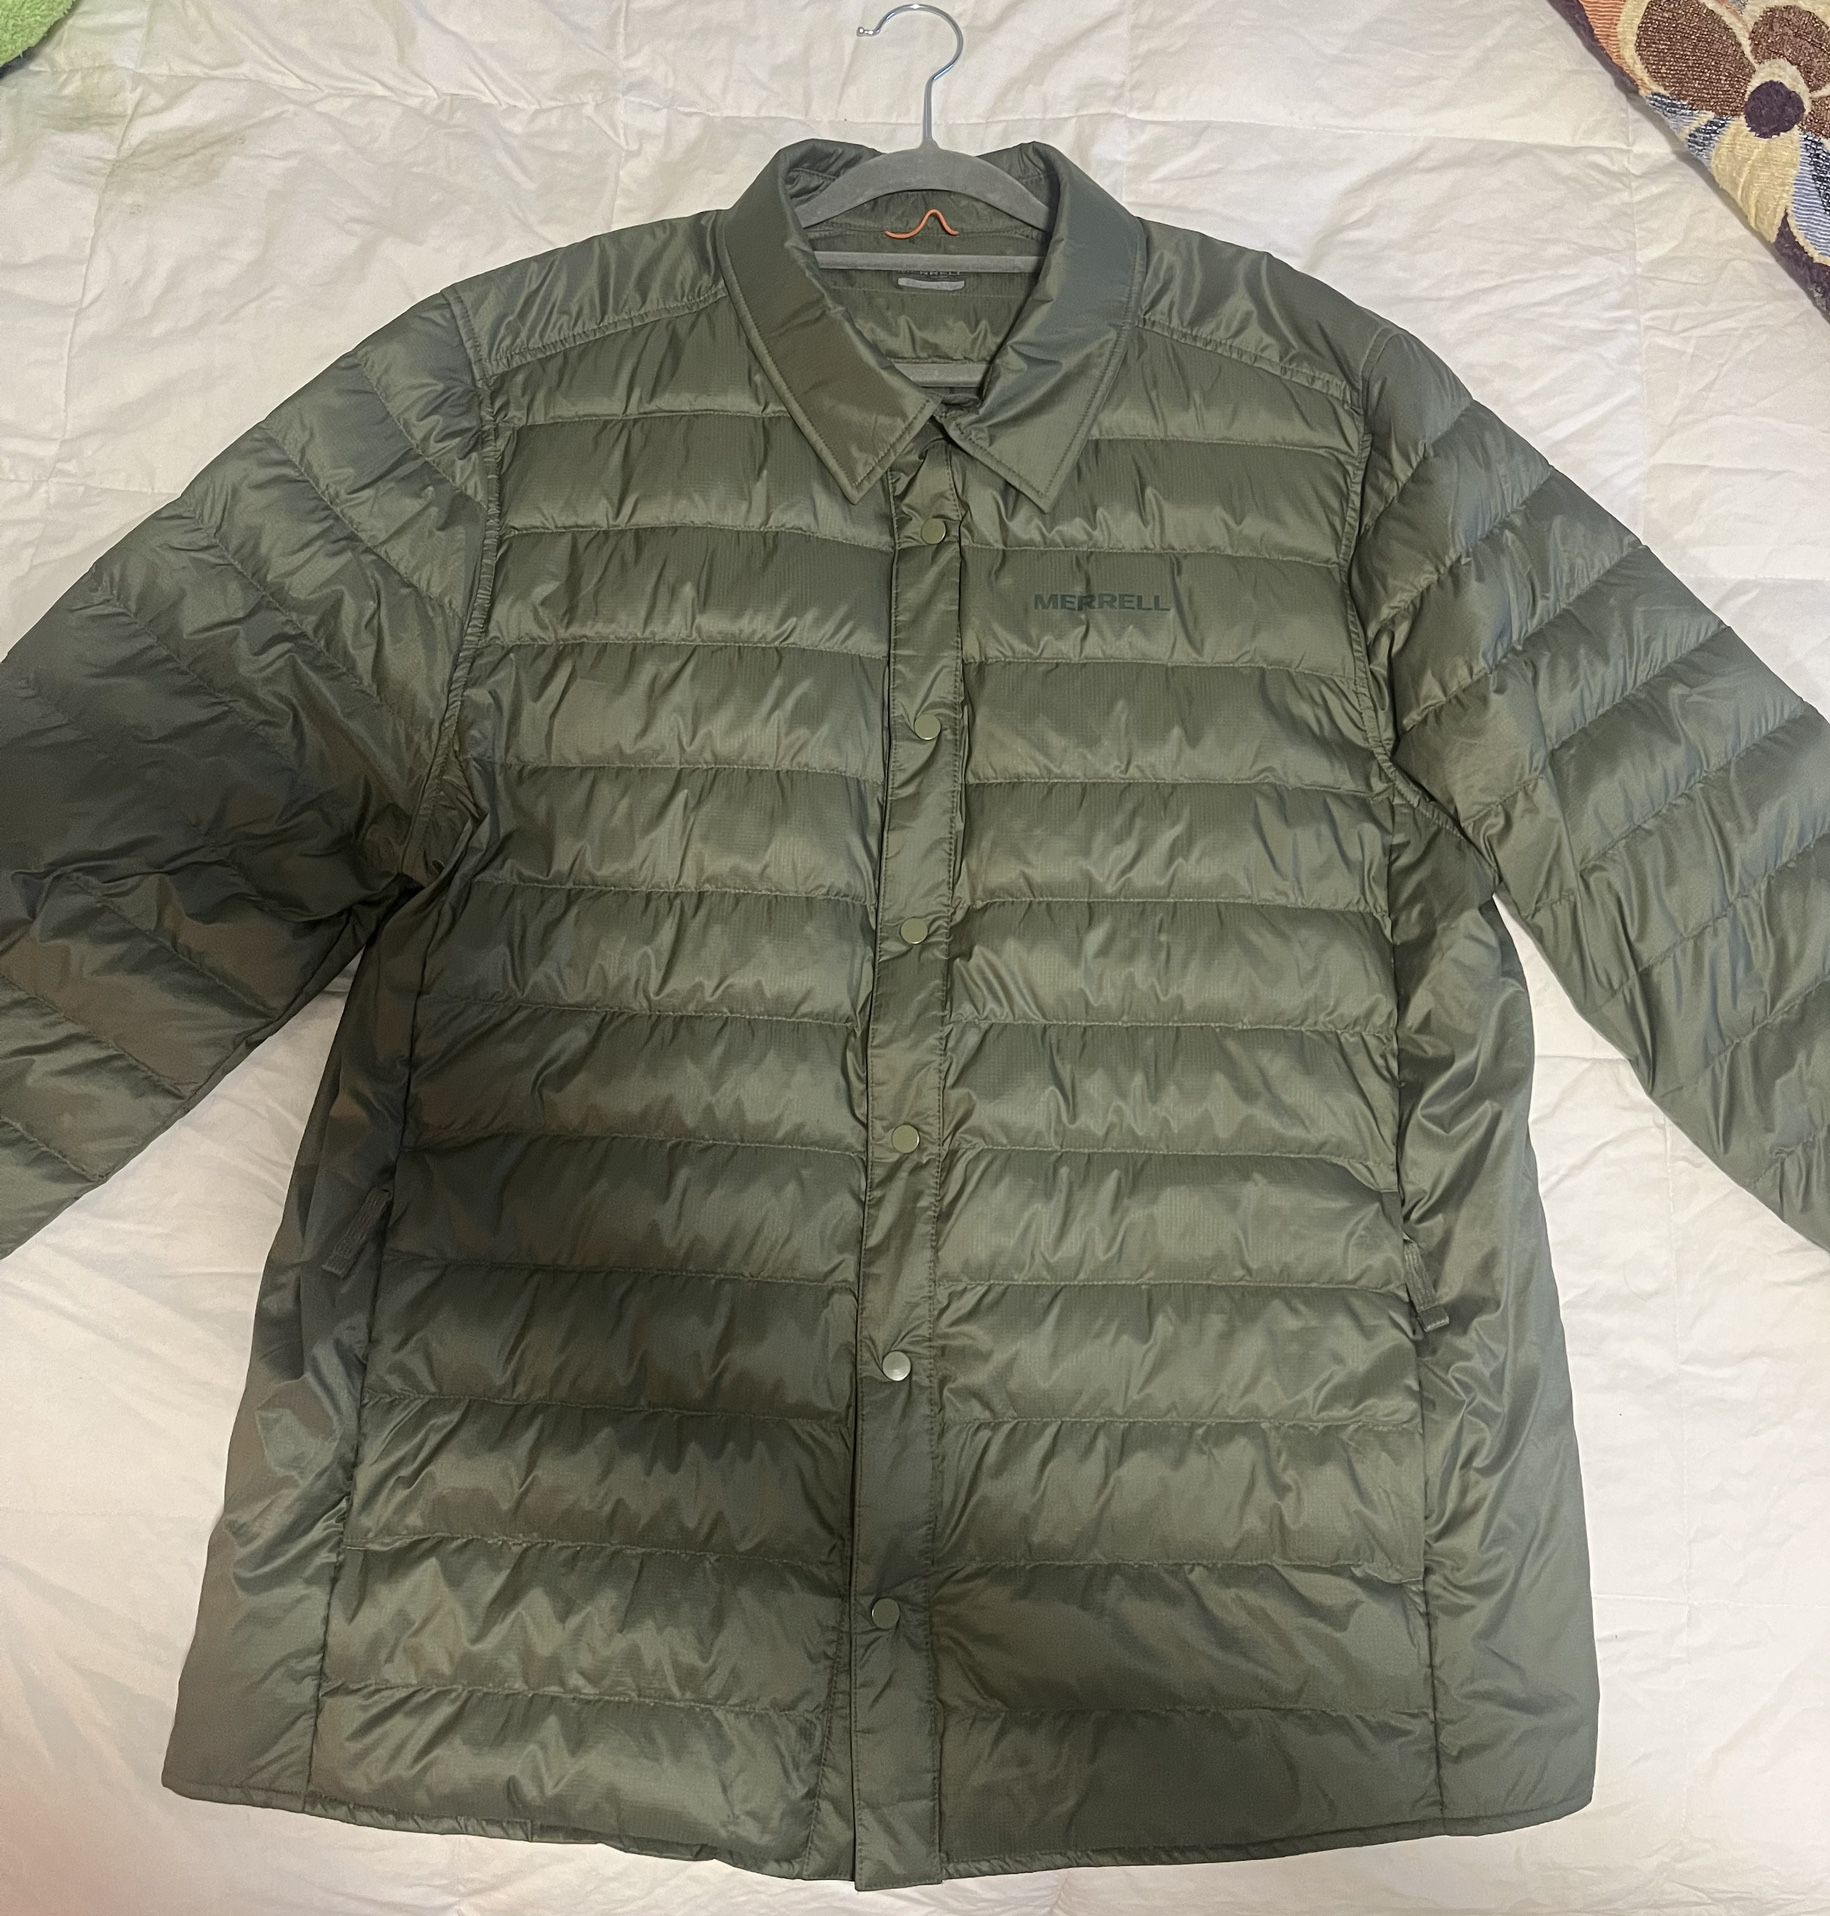 Merrell Men’s Ridgevent Jacket - Large - Green